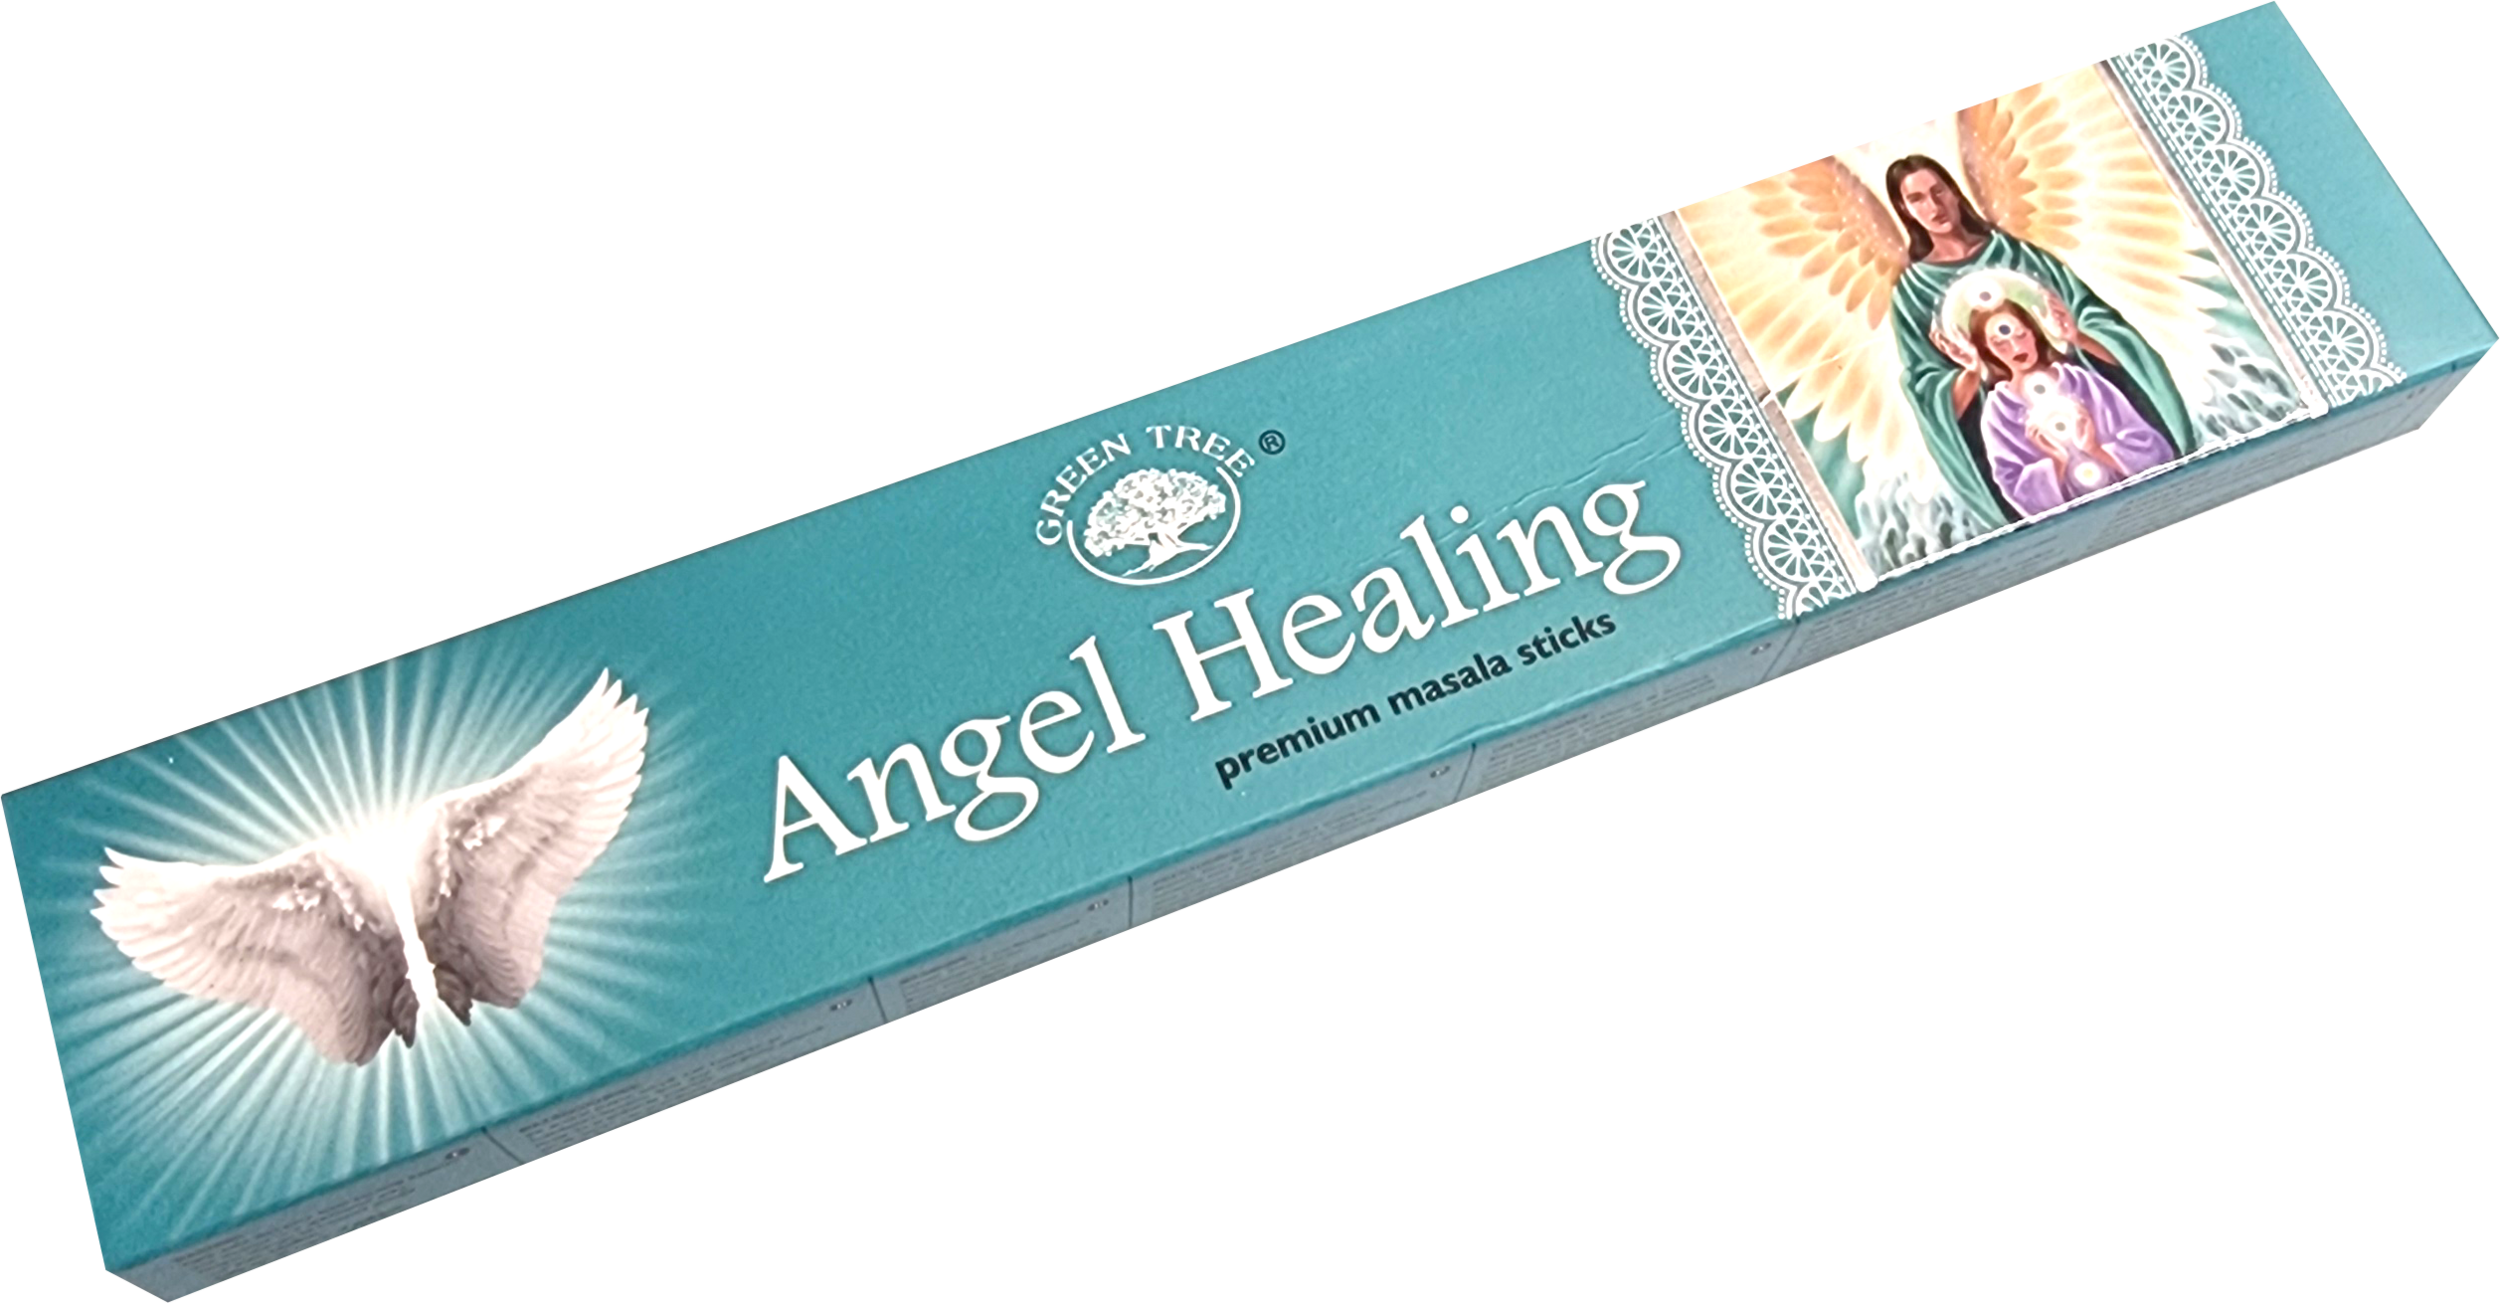 angel-healing